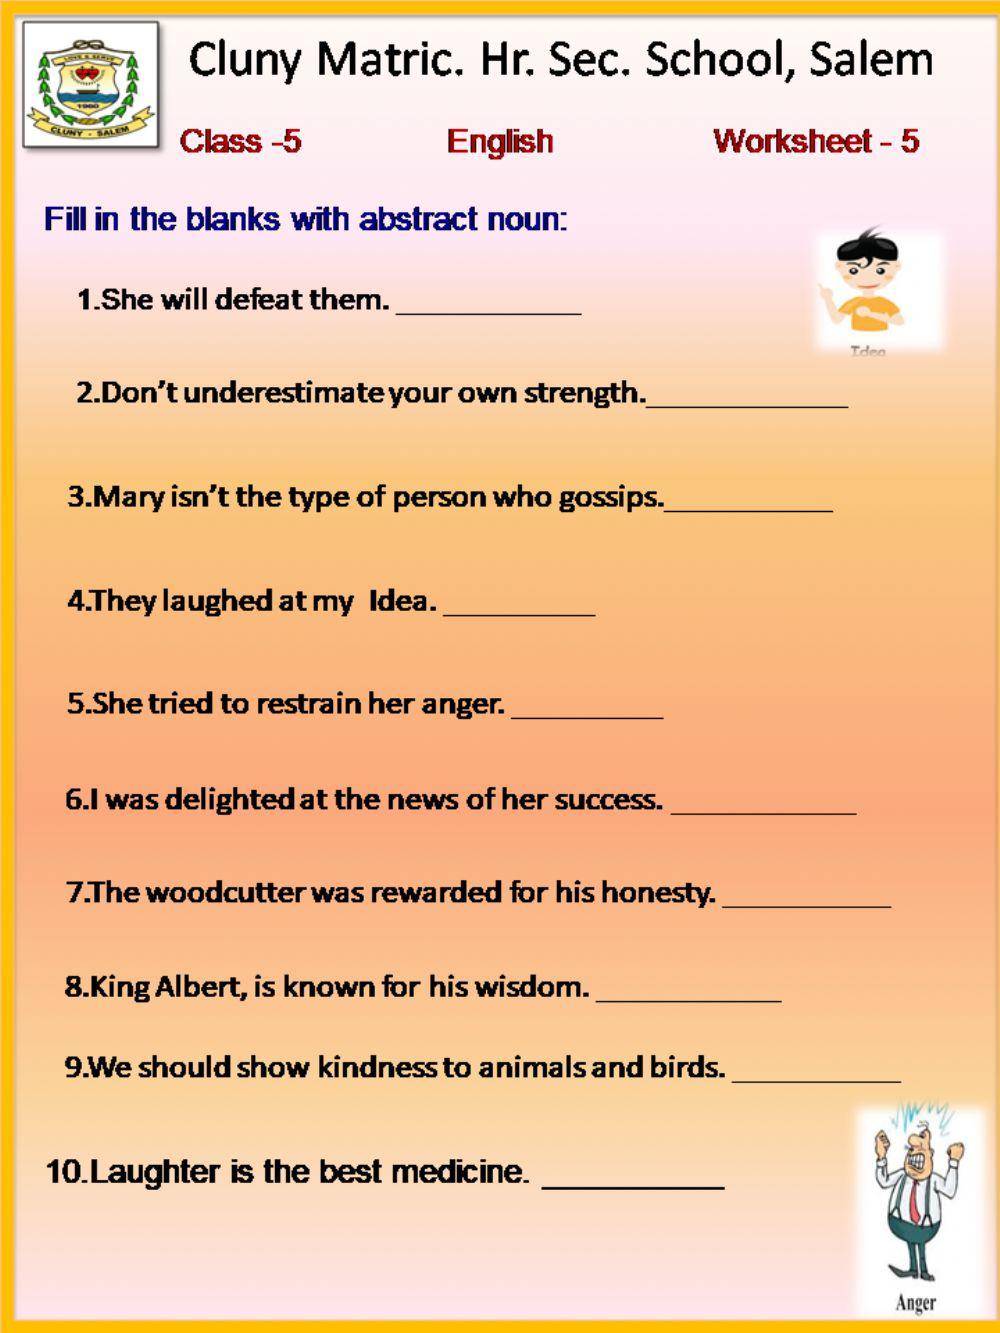 Class 5 English Worksheet - 5